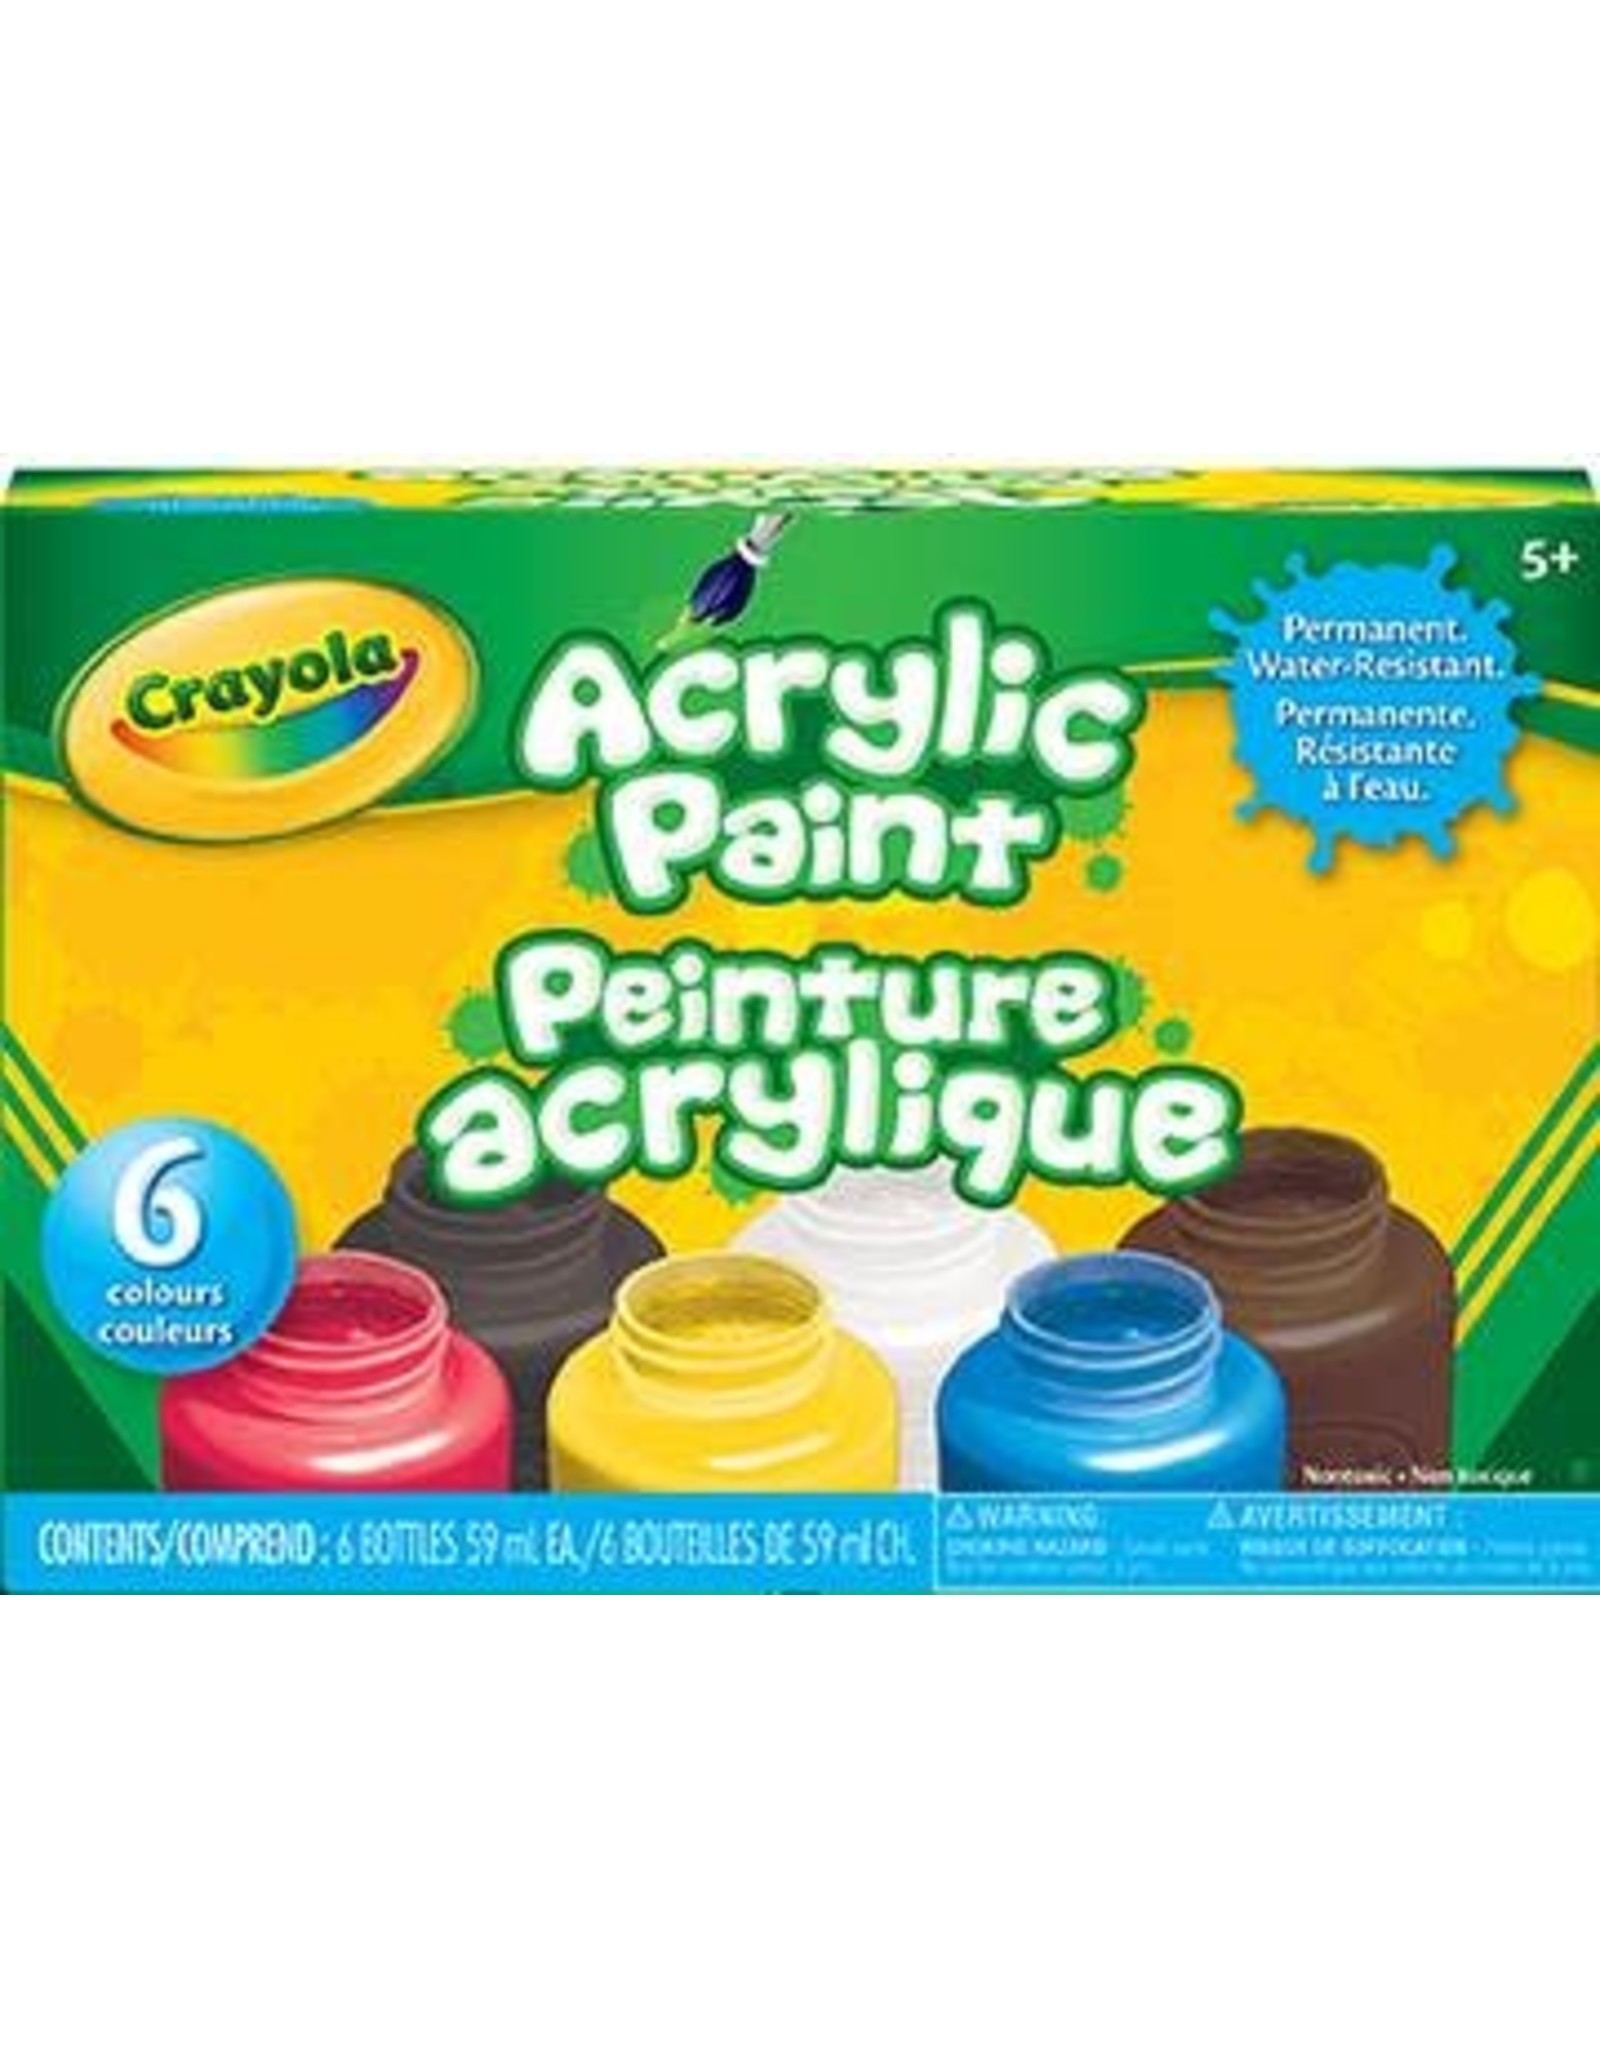 Crayola Acrylic paint / Peinture acrylique - 6 colors